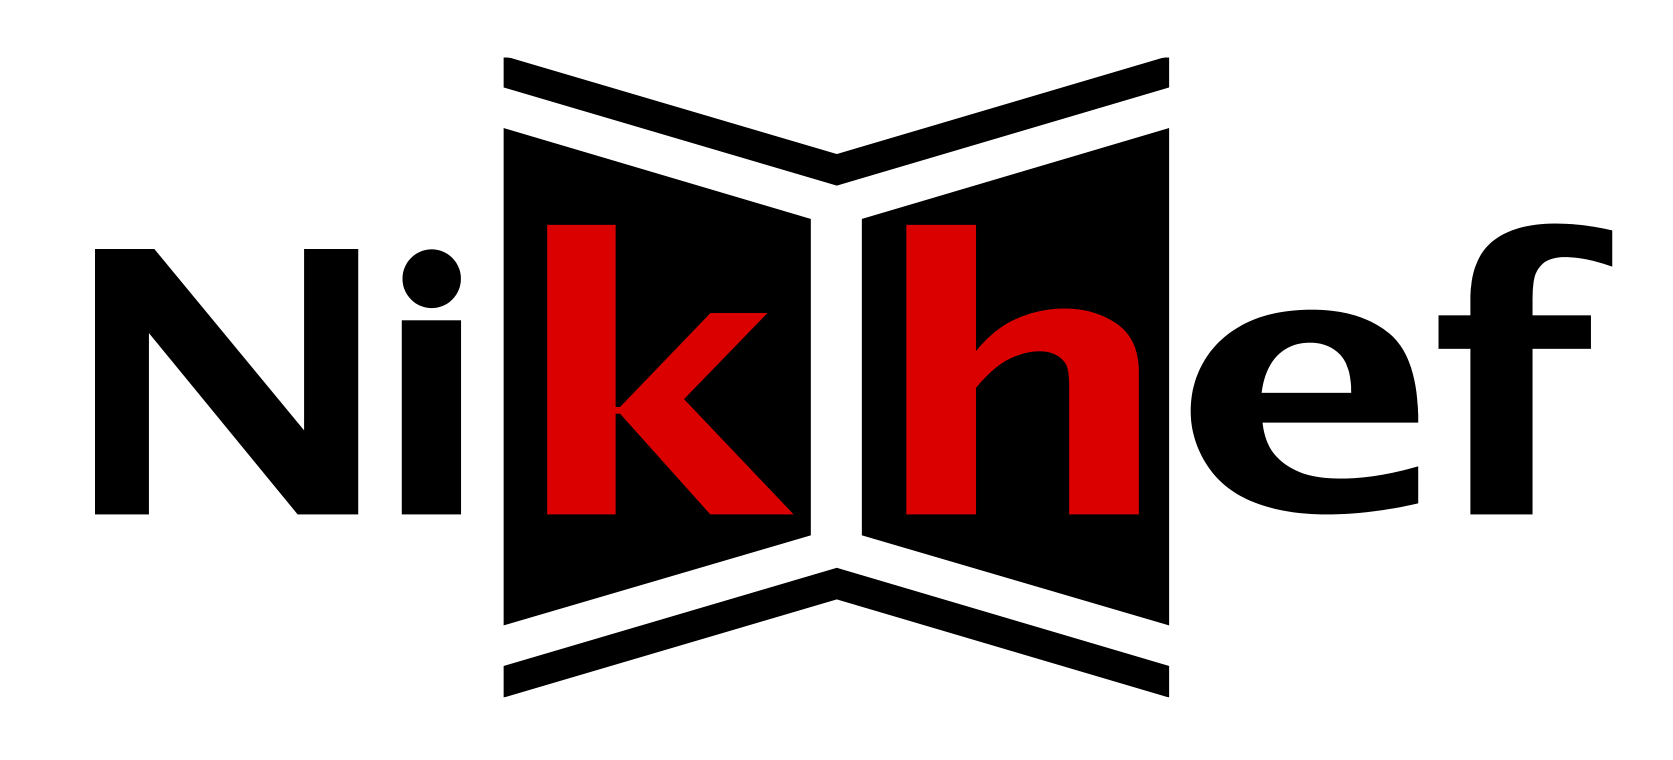 Nikhef logo